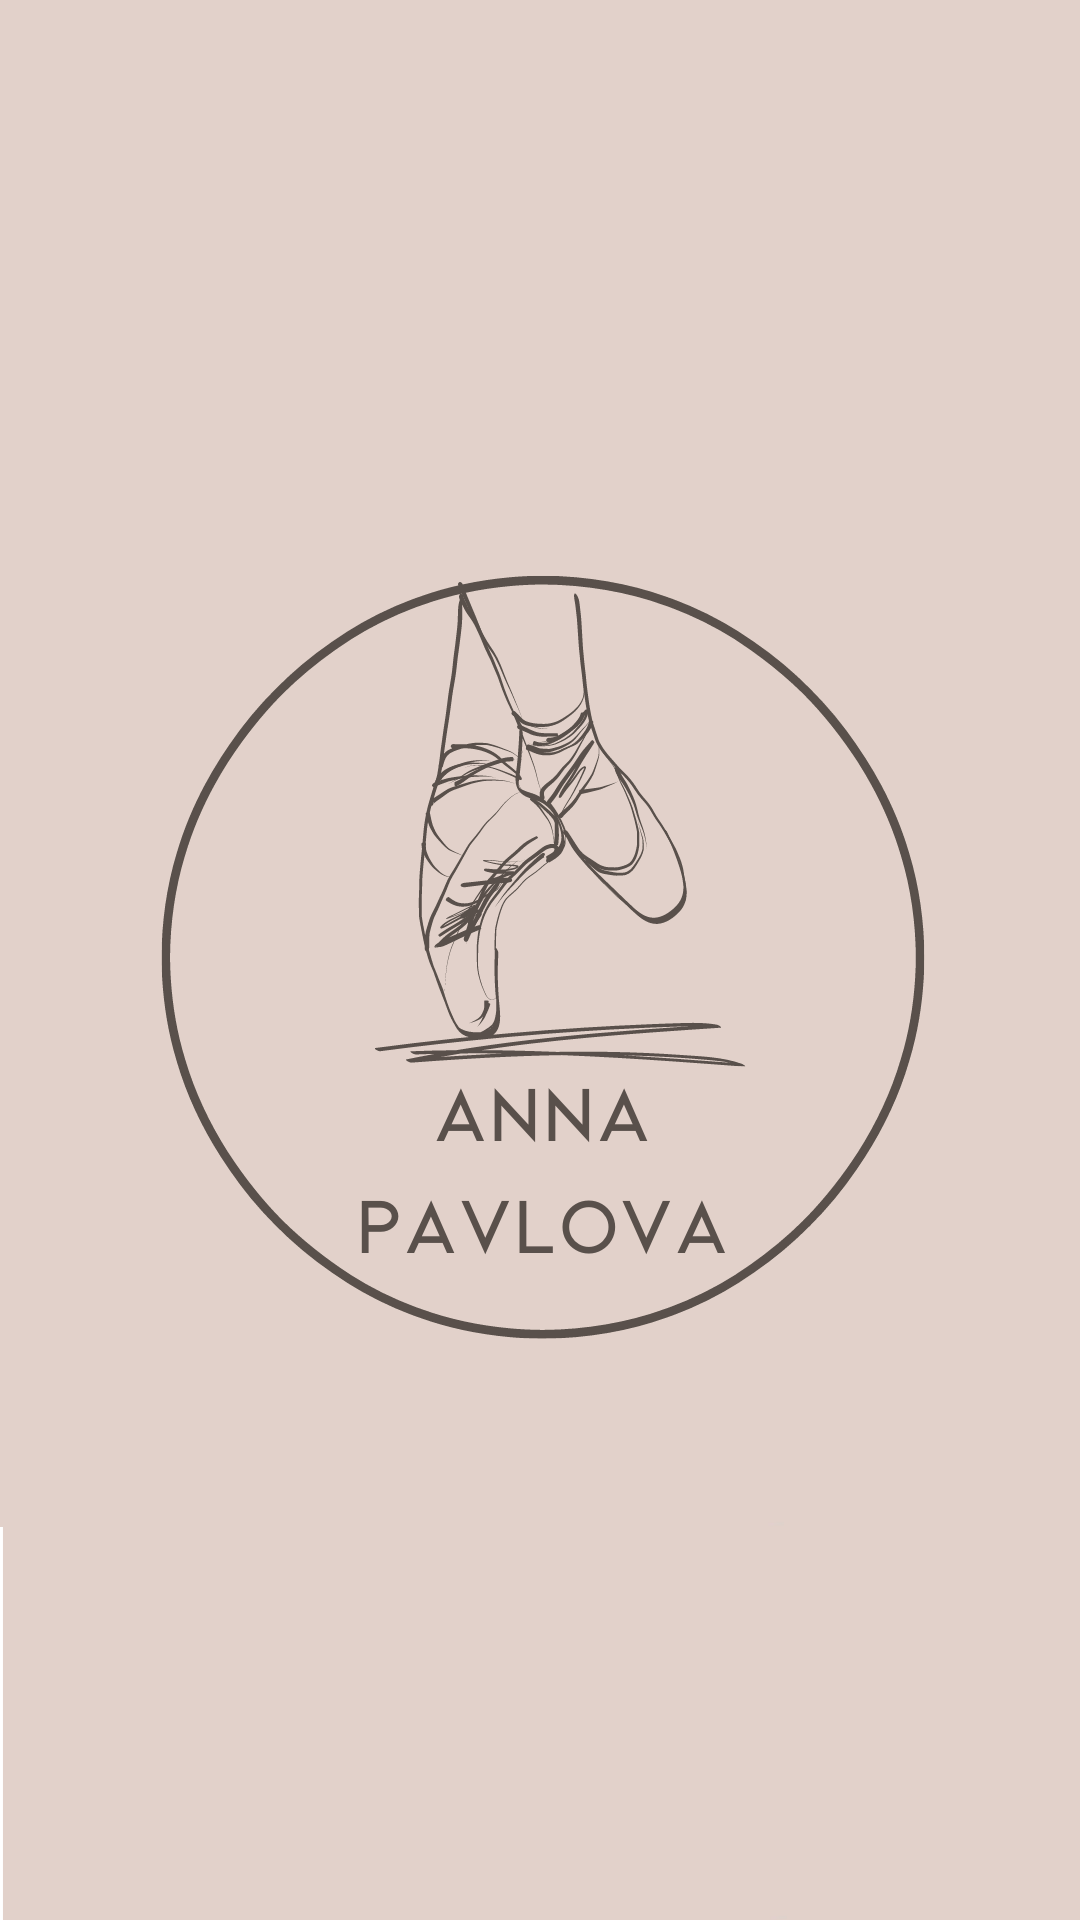 Anna Pavlova Letter - Prima Ballerina